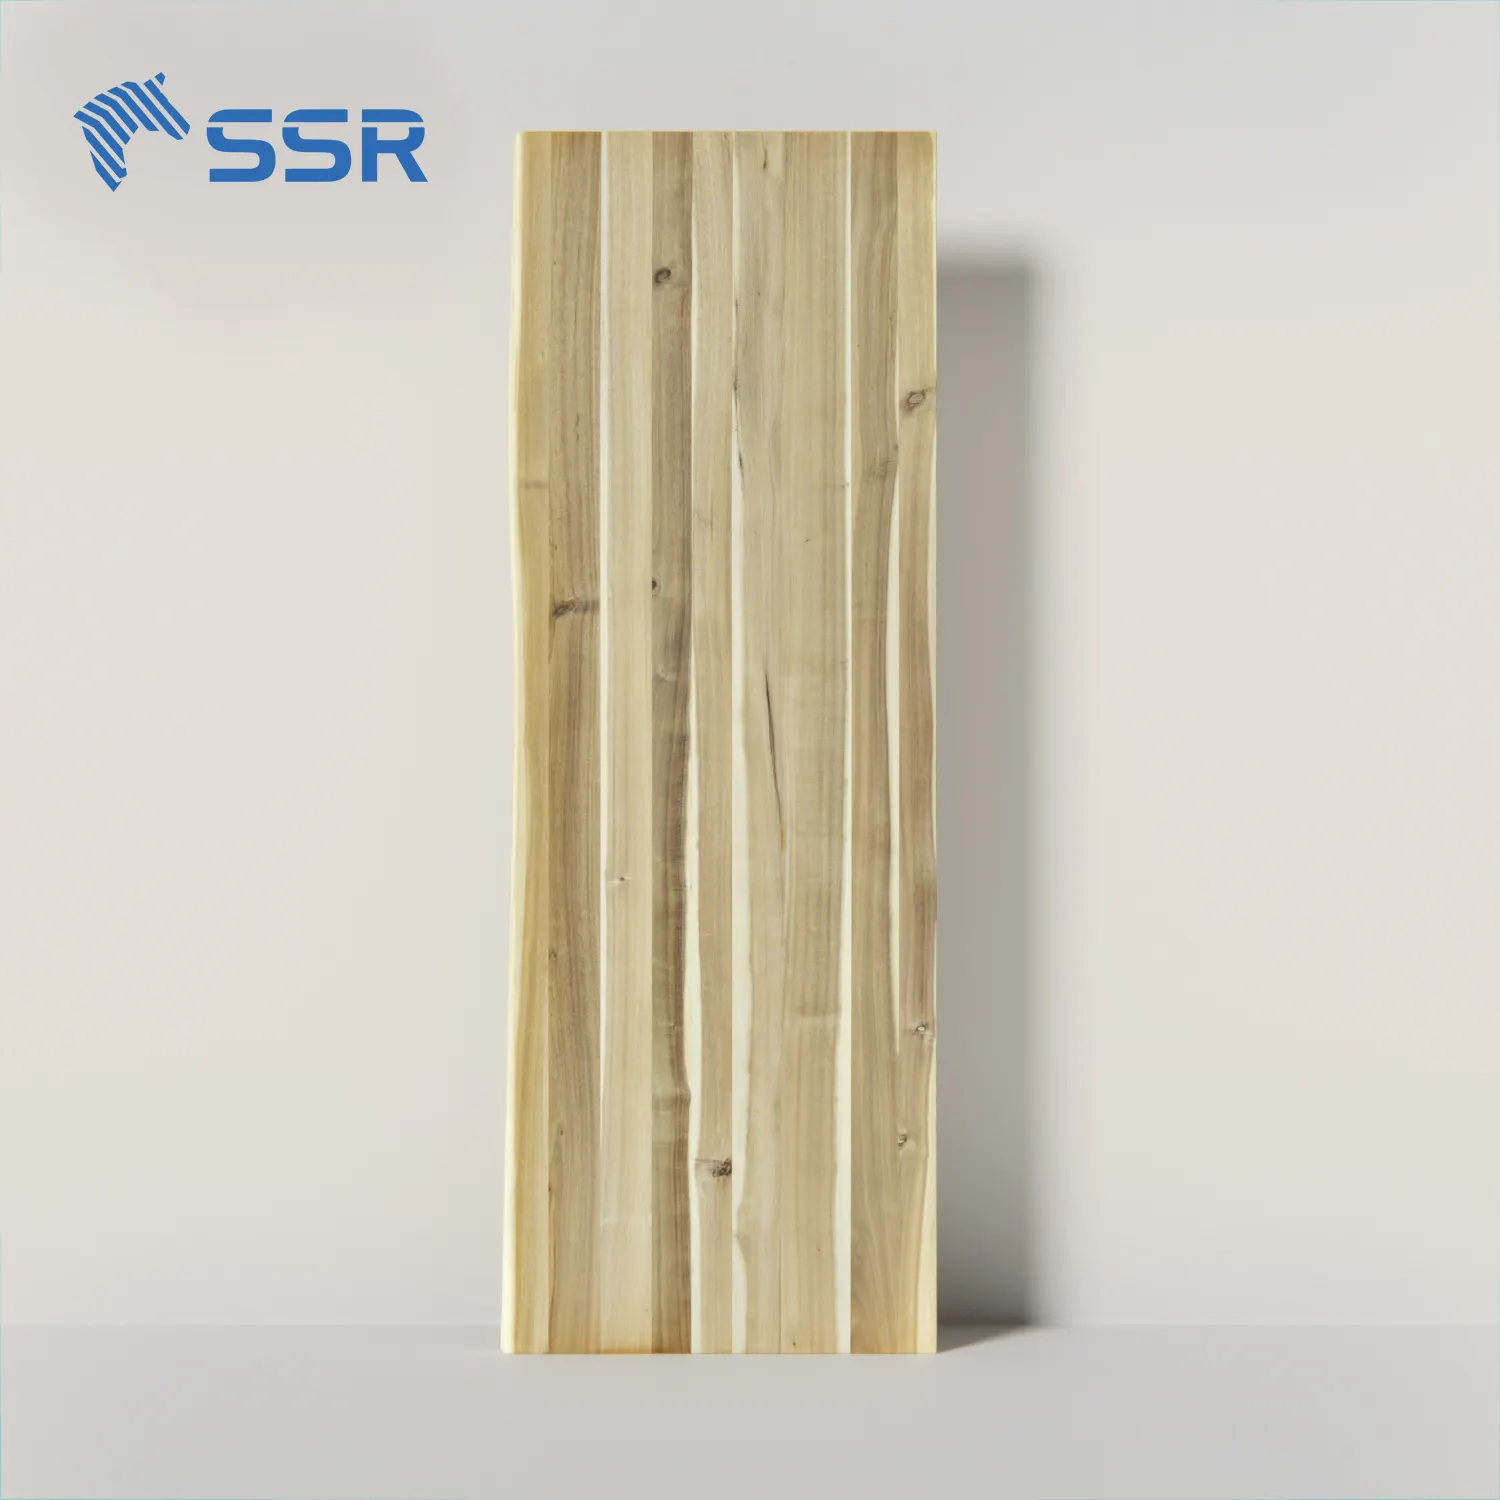 SSR VINA - Acacia Wood Edge Glued Live Edge Countertop - Acacia Wood Solid Panel acacia live edge worktop kitchen countertop